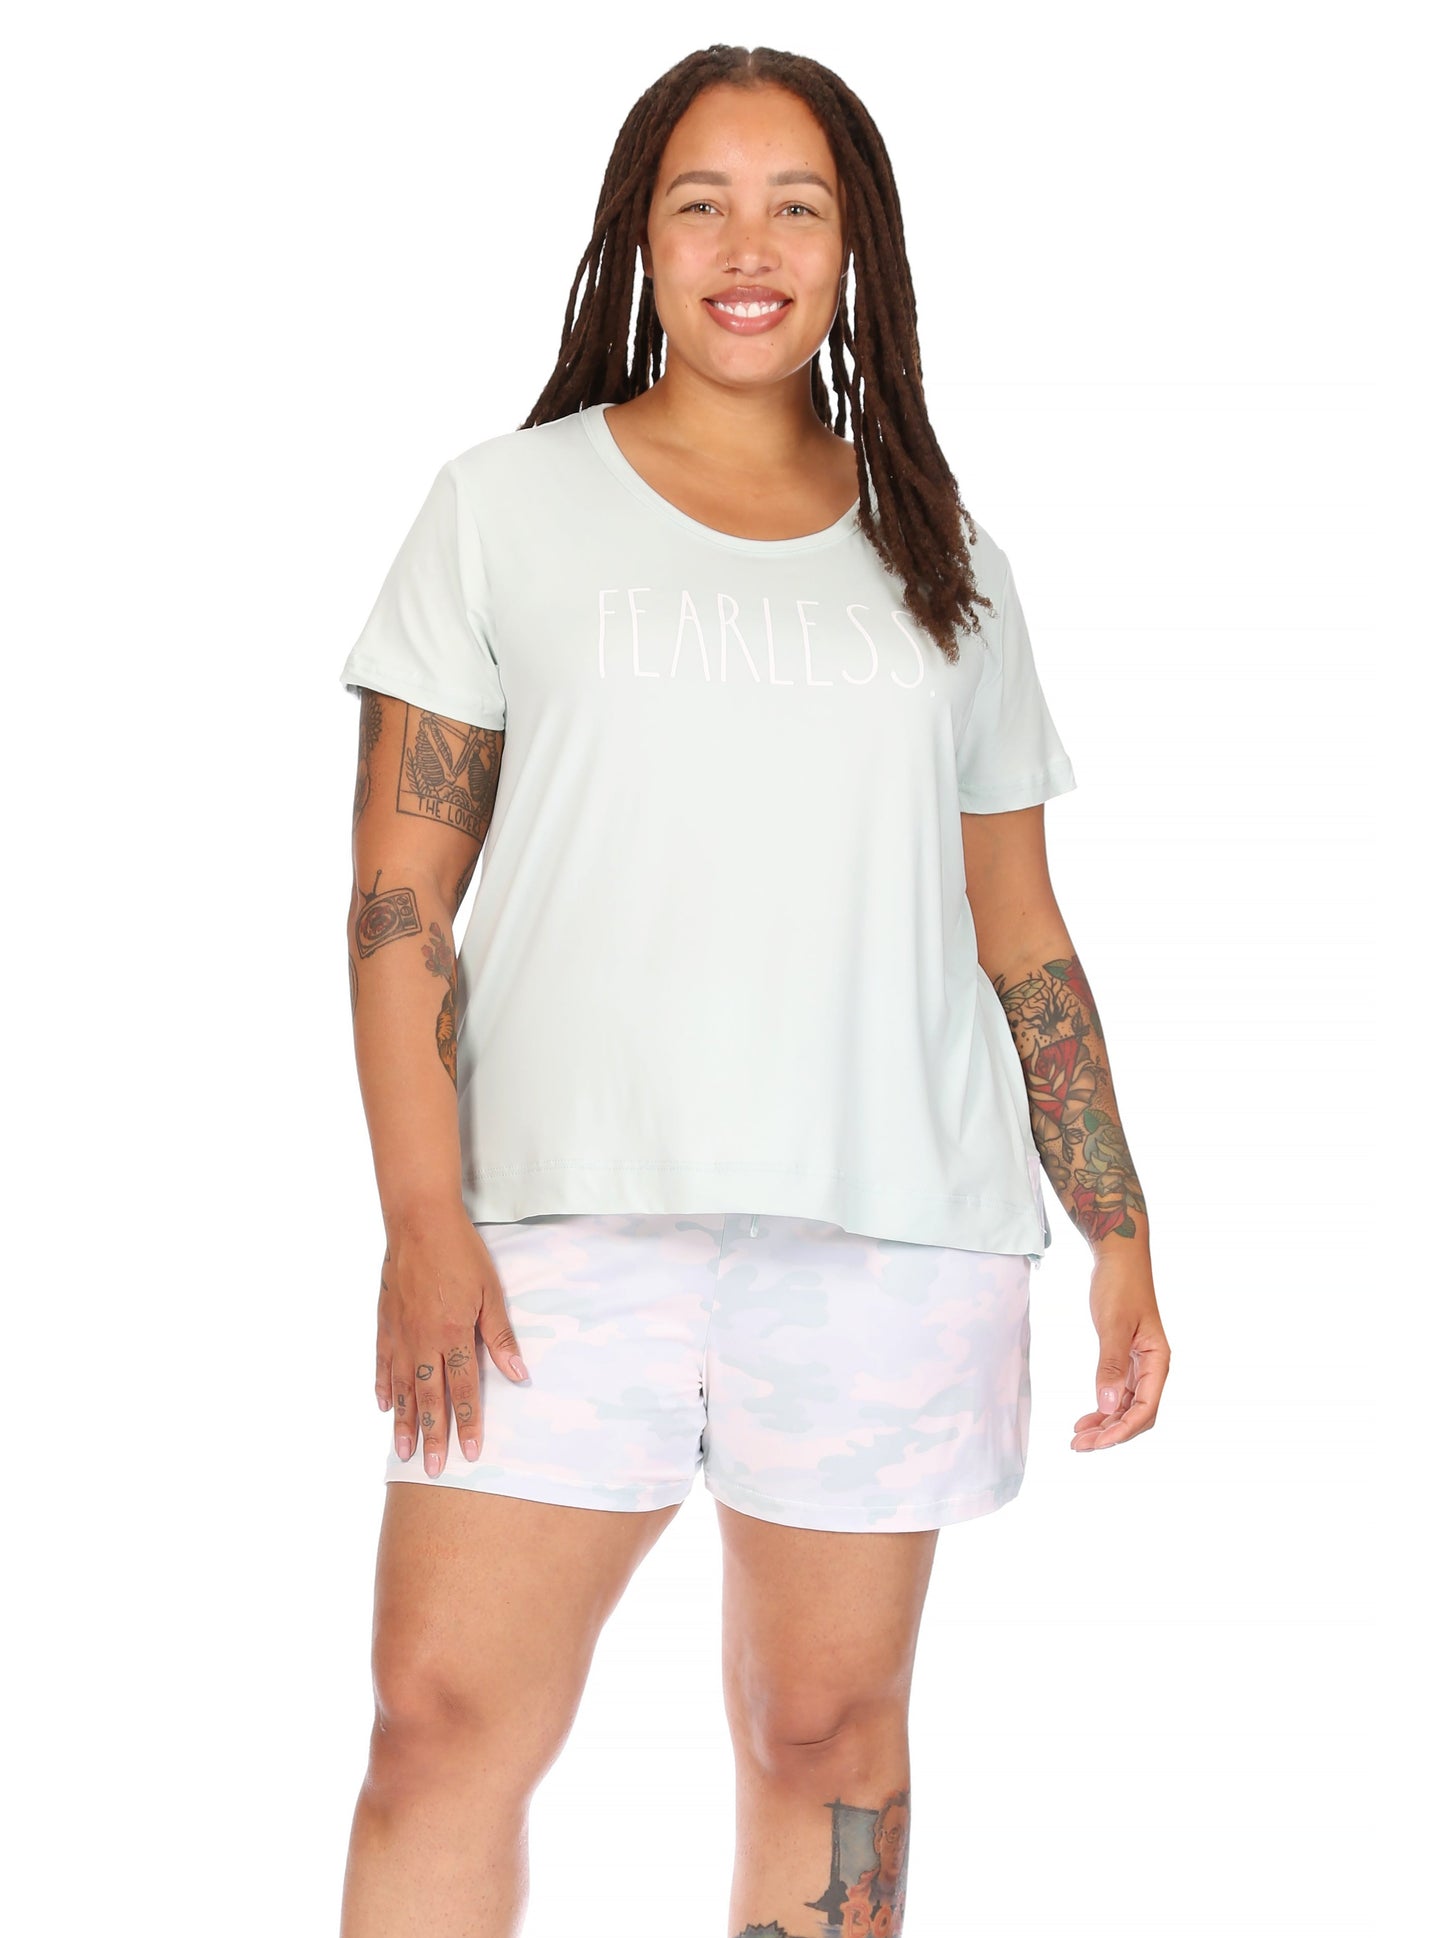 Women's Plus Size "FEARLESS" Short Sleeve Side Slit Tee and Shorts Pajama Set - Rae Dunn Wear - W Shorts Set